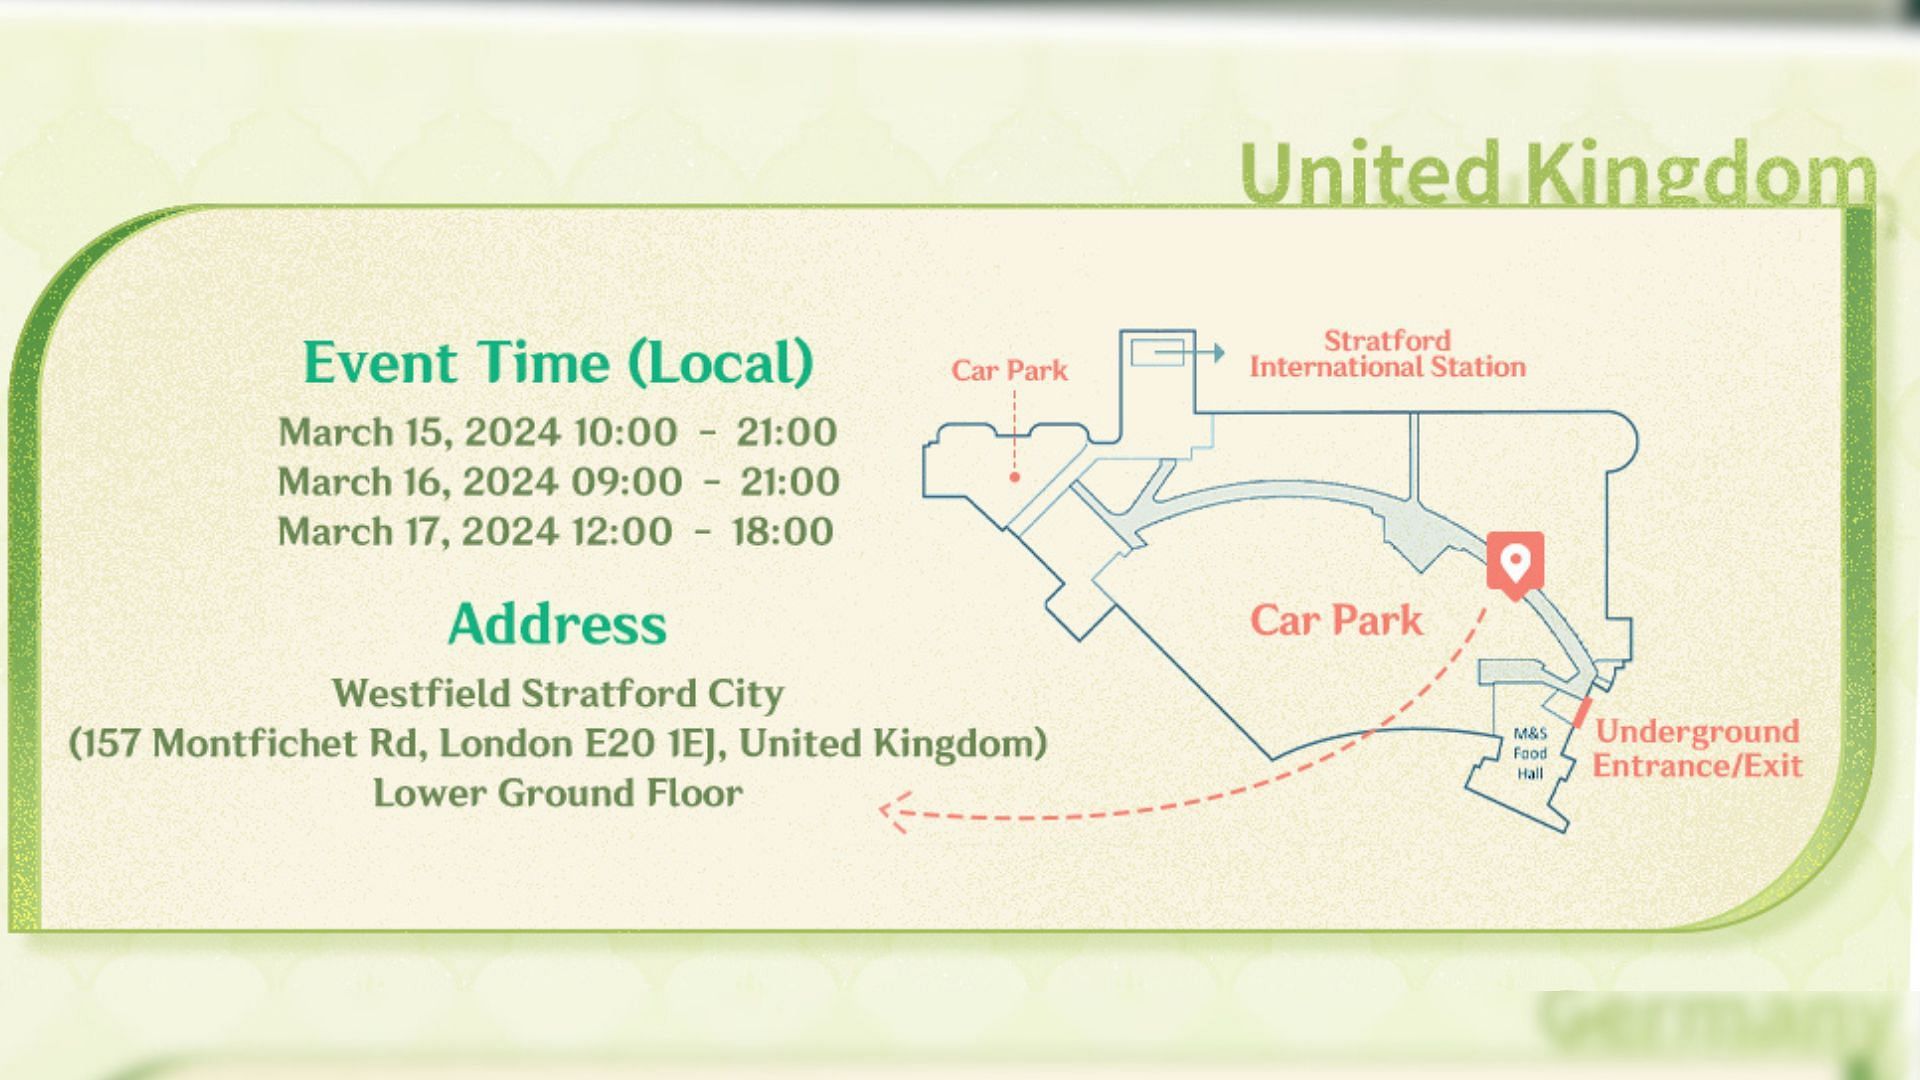 UK event time and address (Image via HoYoverse)